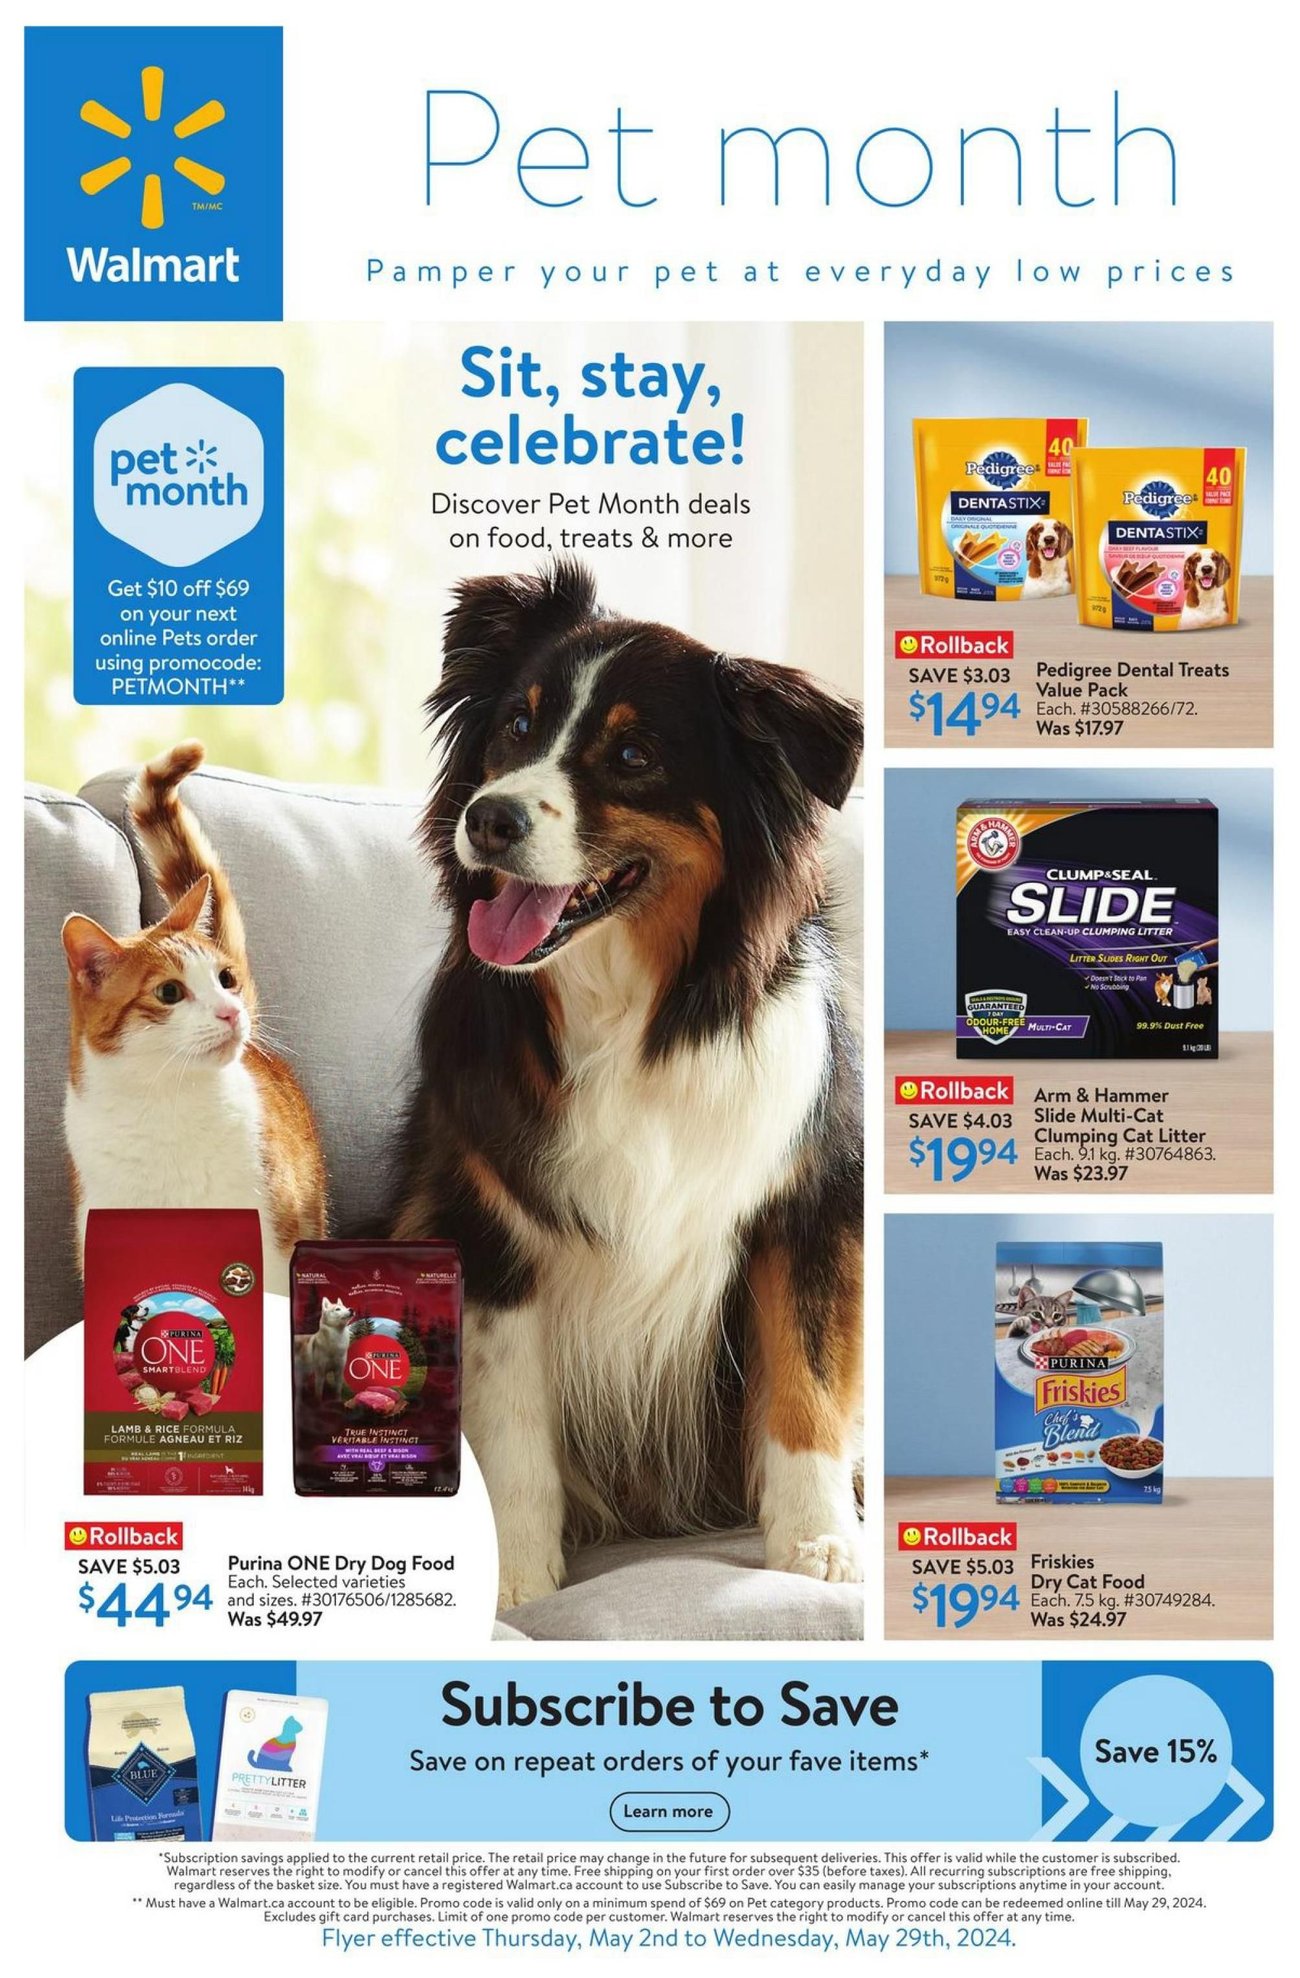 Walmart Canada - Pet Month Specials - Page 1